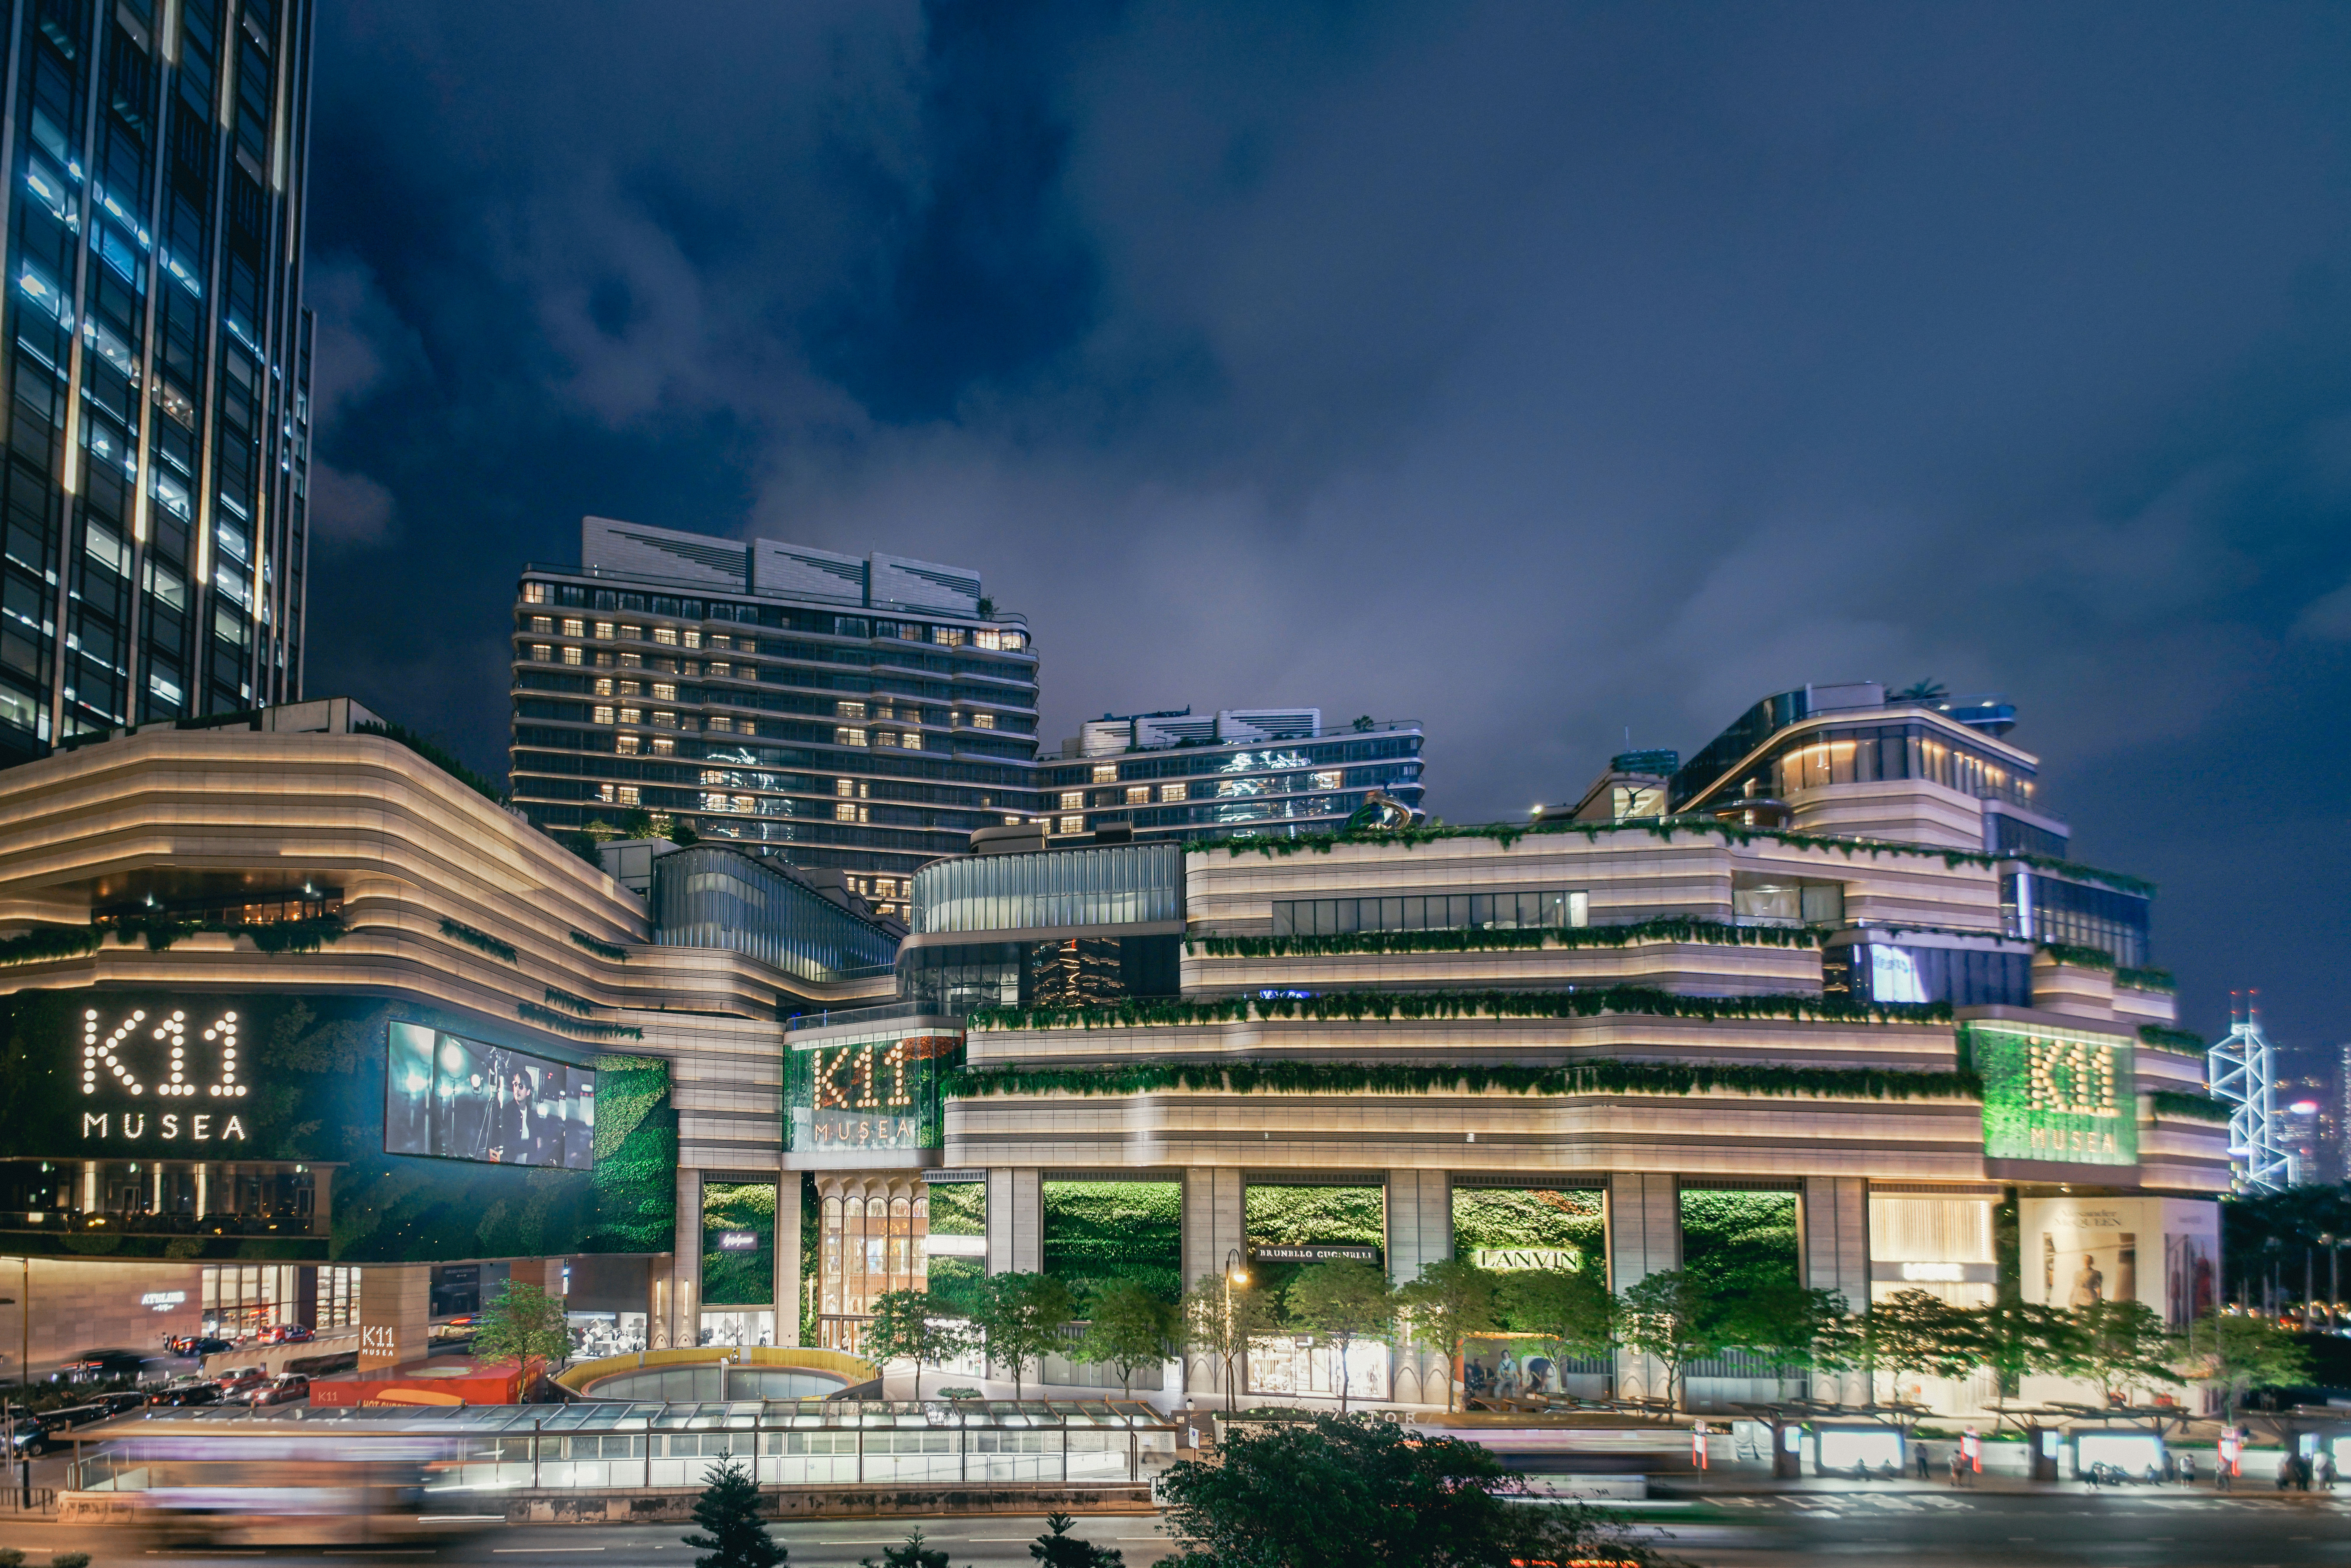 K11 MUSEA is Hong Kong's latest cultural-retail destination